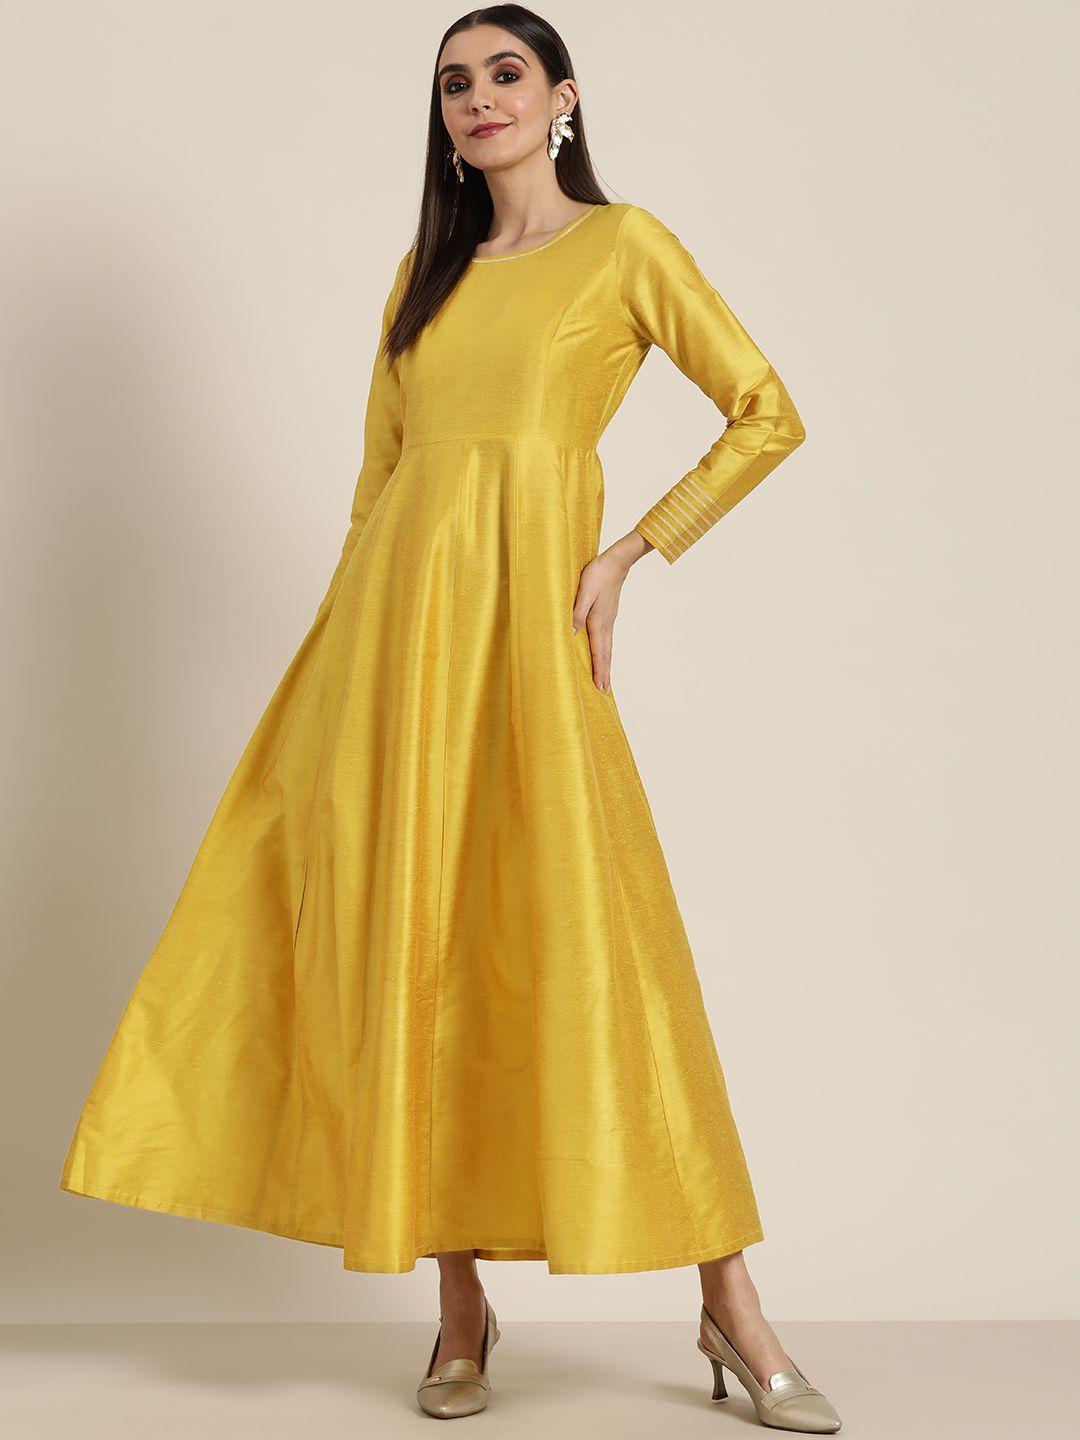 shae by sassafras mustard yellow ethnic a-line maxi dress